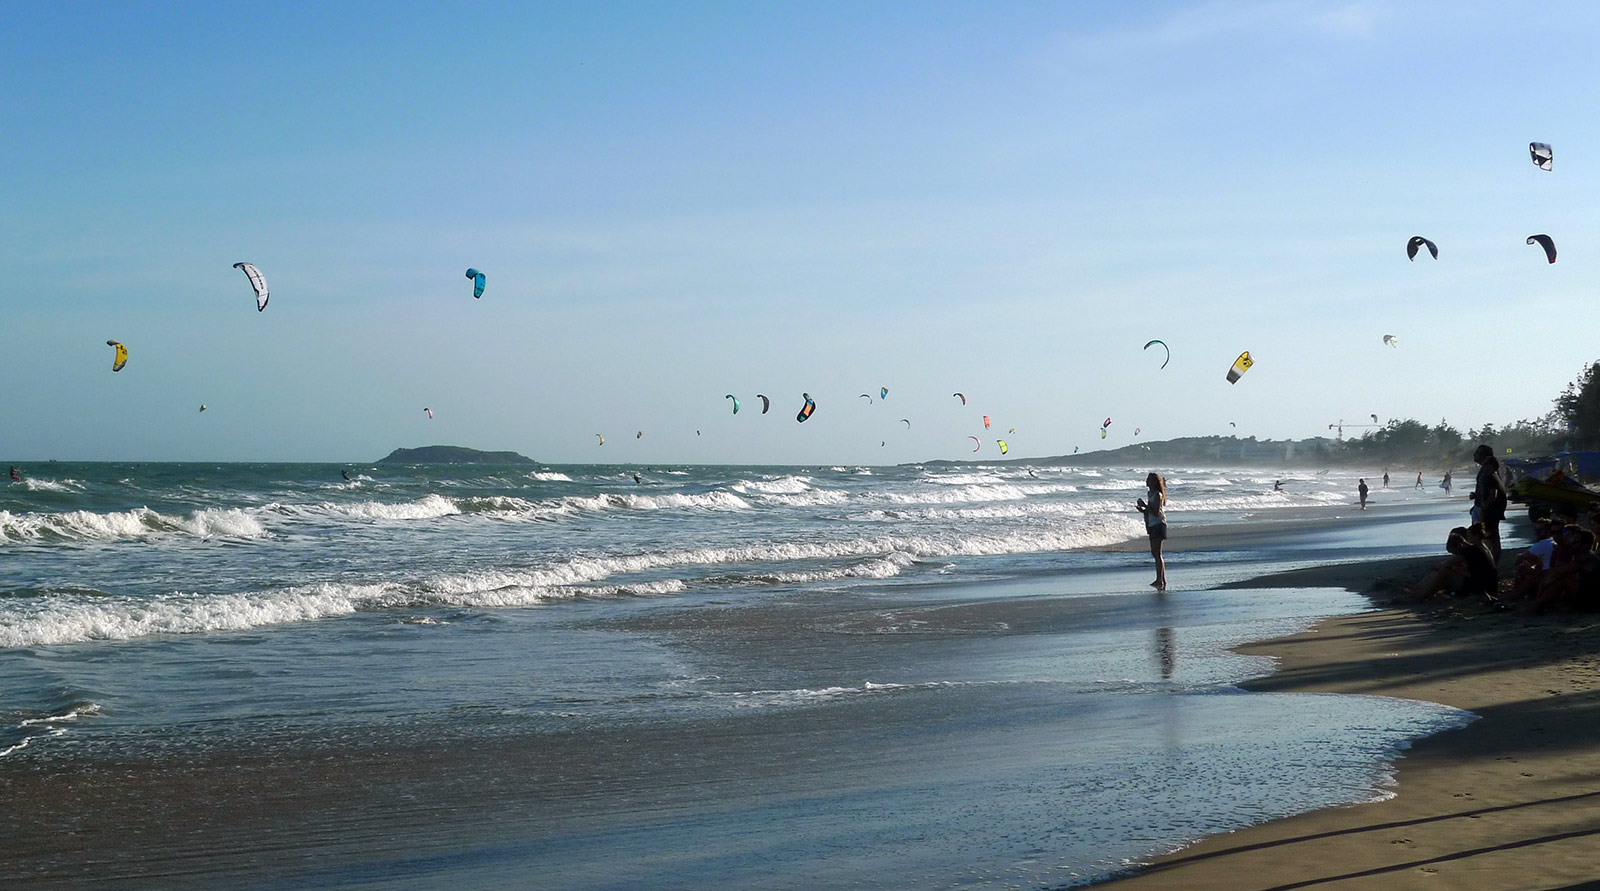 Malibu kitesurf spot, Mui Ne. Kites flying and waves on the water.